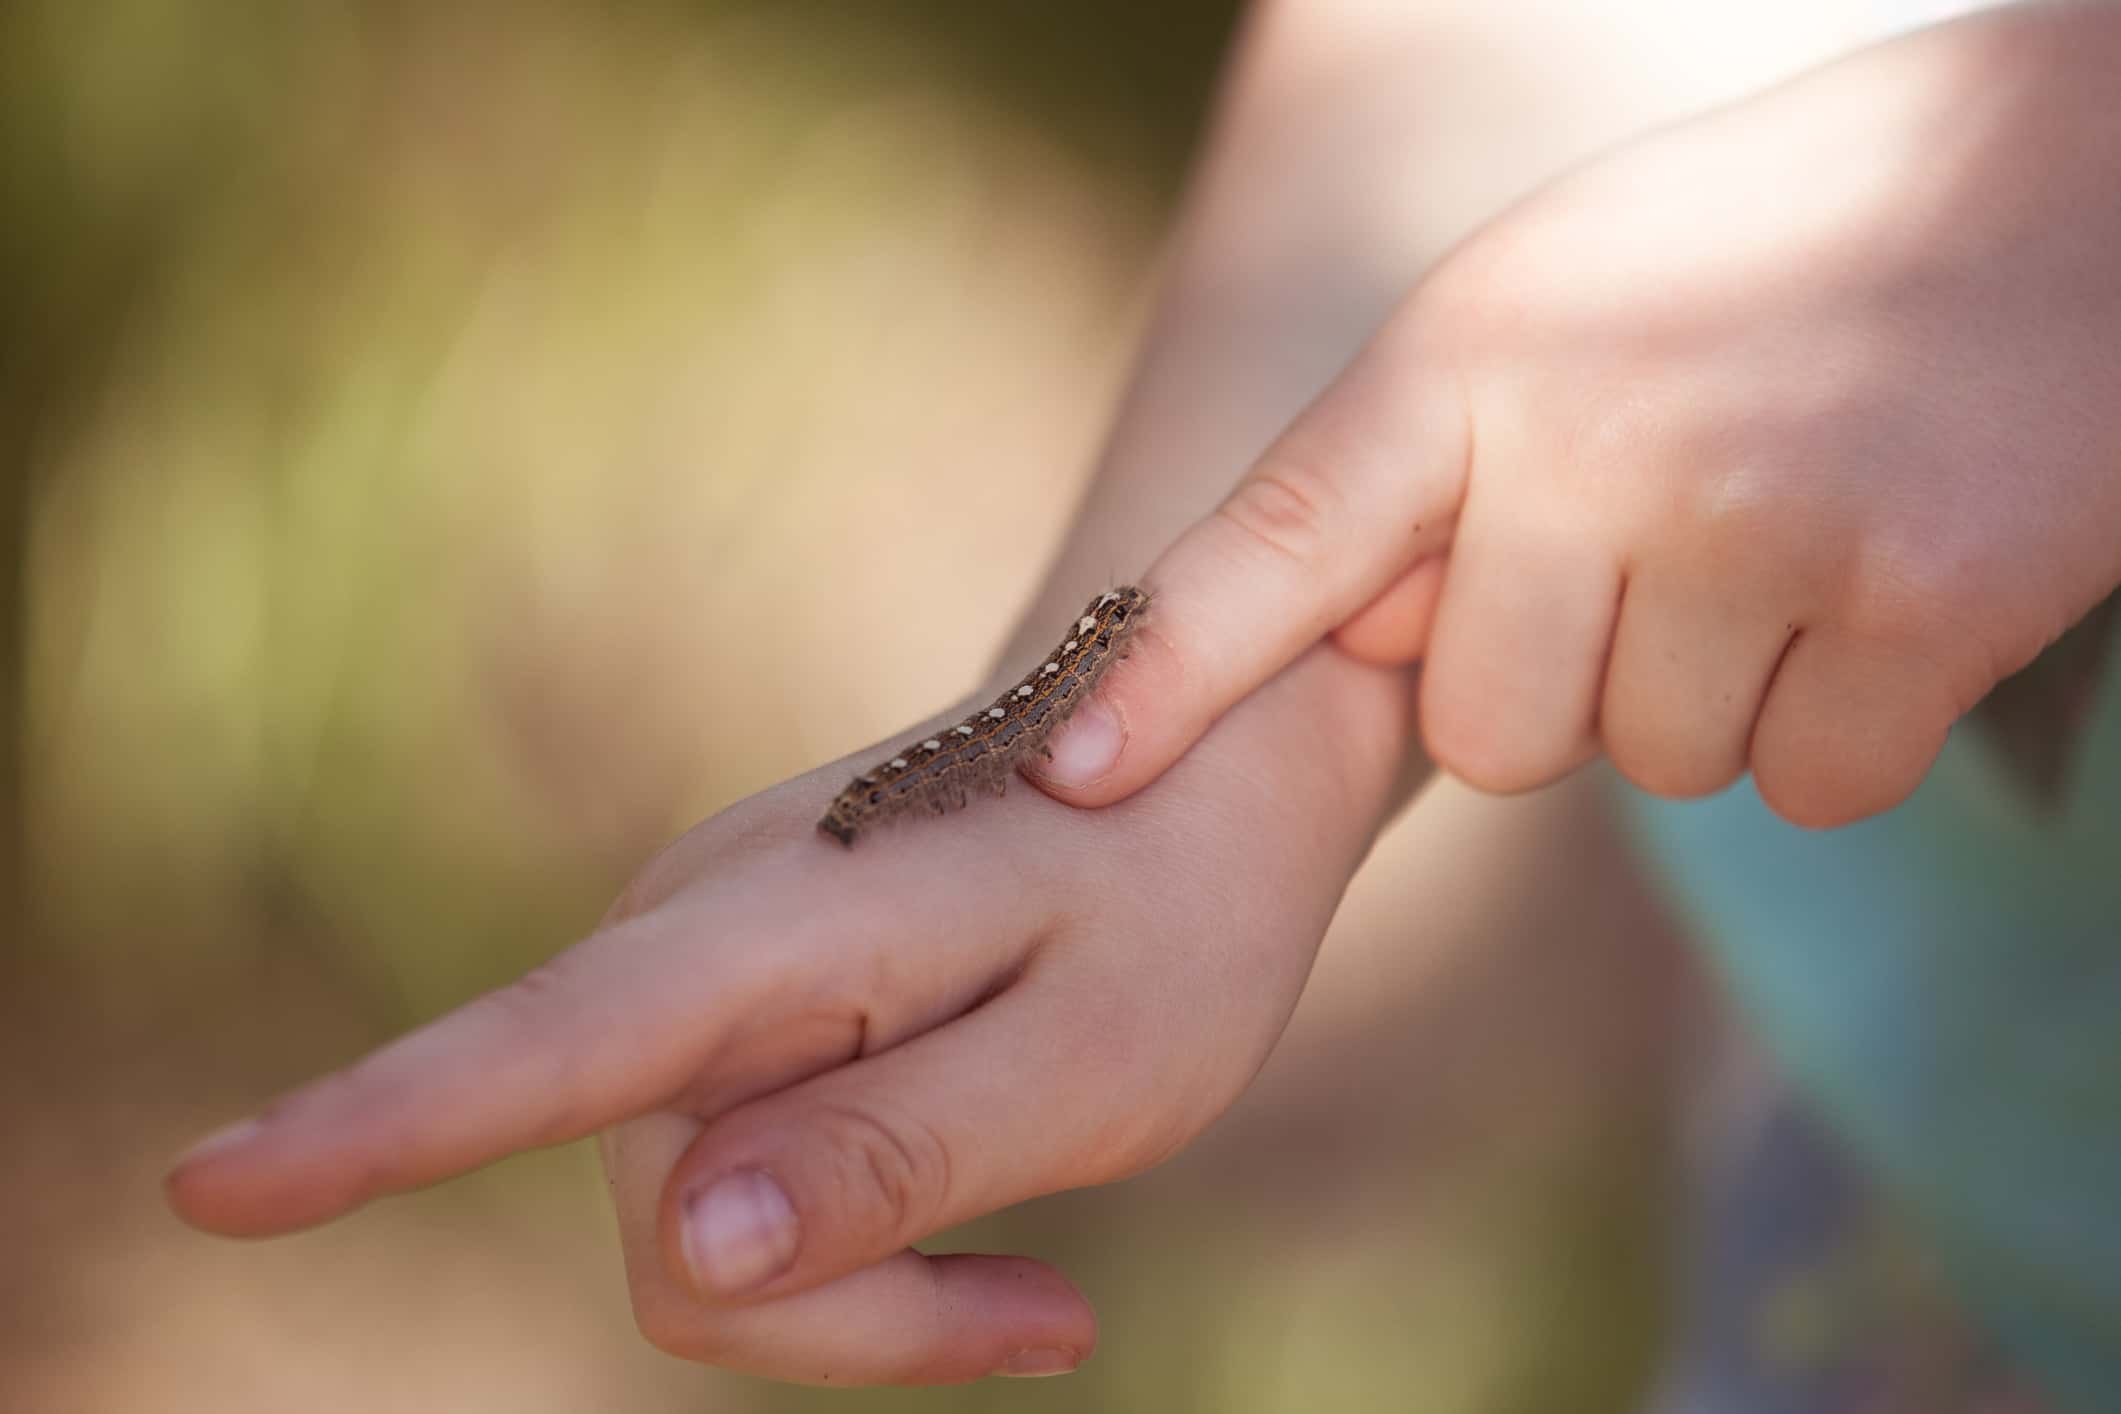 Caterpillar on child's hands